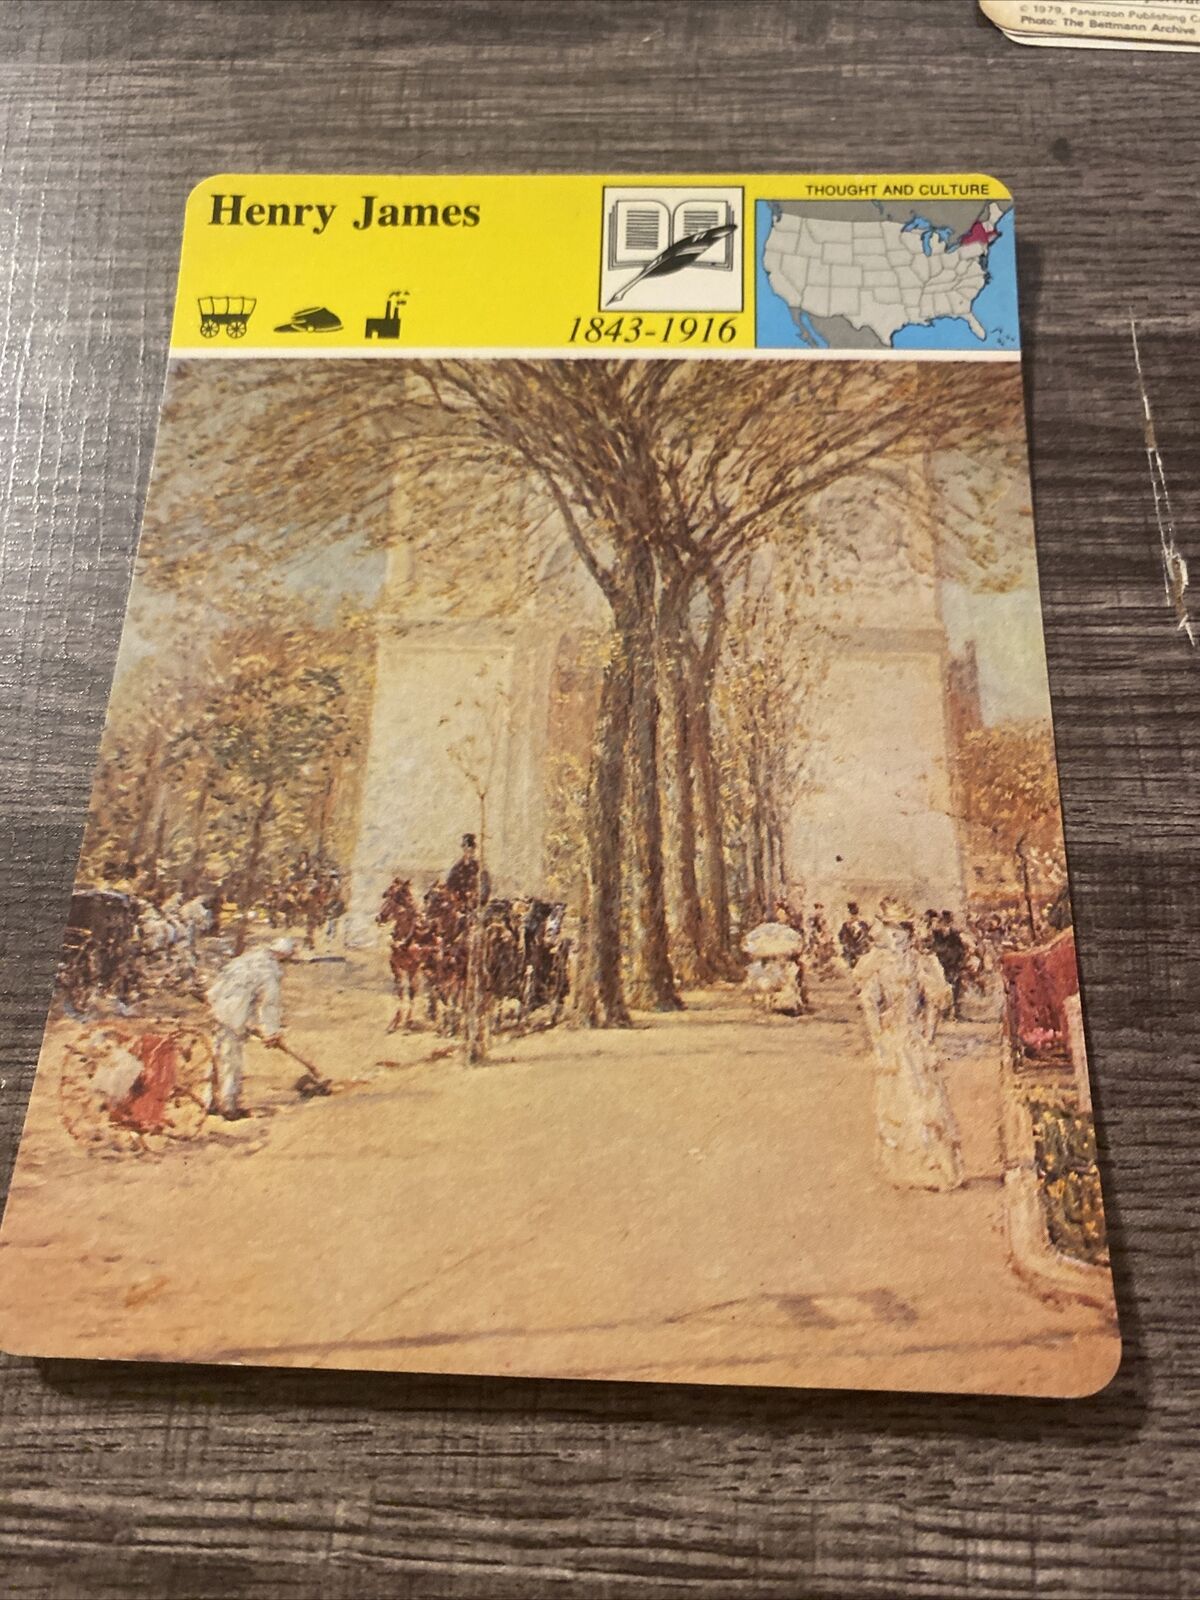 1979 panarizon henry james card unlaminated